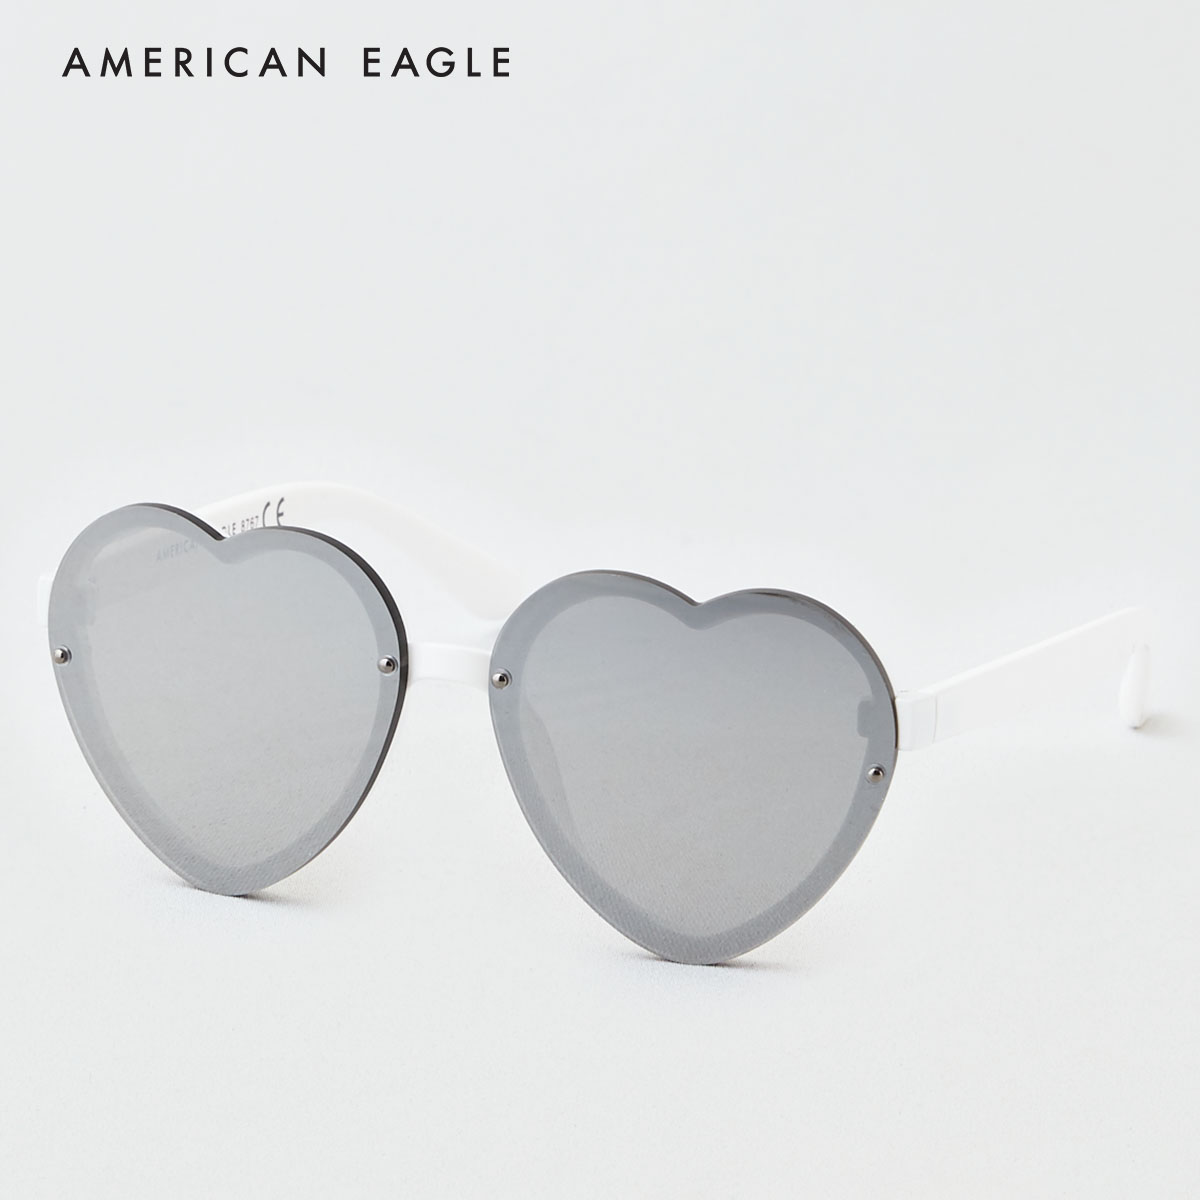 American Eagle Rimless Heart Plastic Sunglasses แว่นตา ผู้หญิง แฟชั่น(048-8767-100)